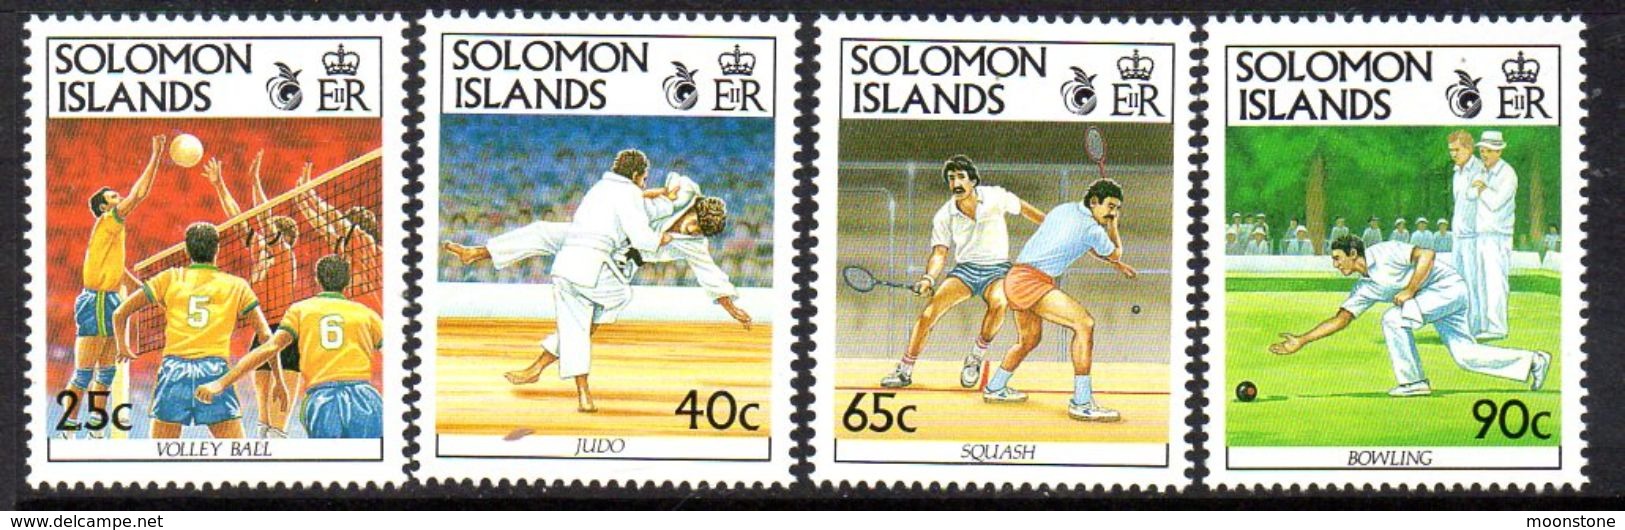 Solomon Islands 1991 9th S. Pacific Games Set Of 4, MNH, SG 698/701 (B) - Solomon Islands (1978-...)